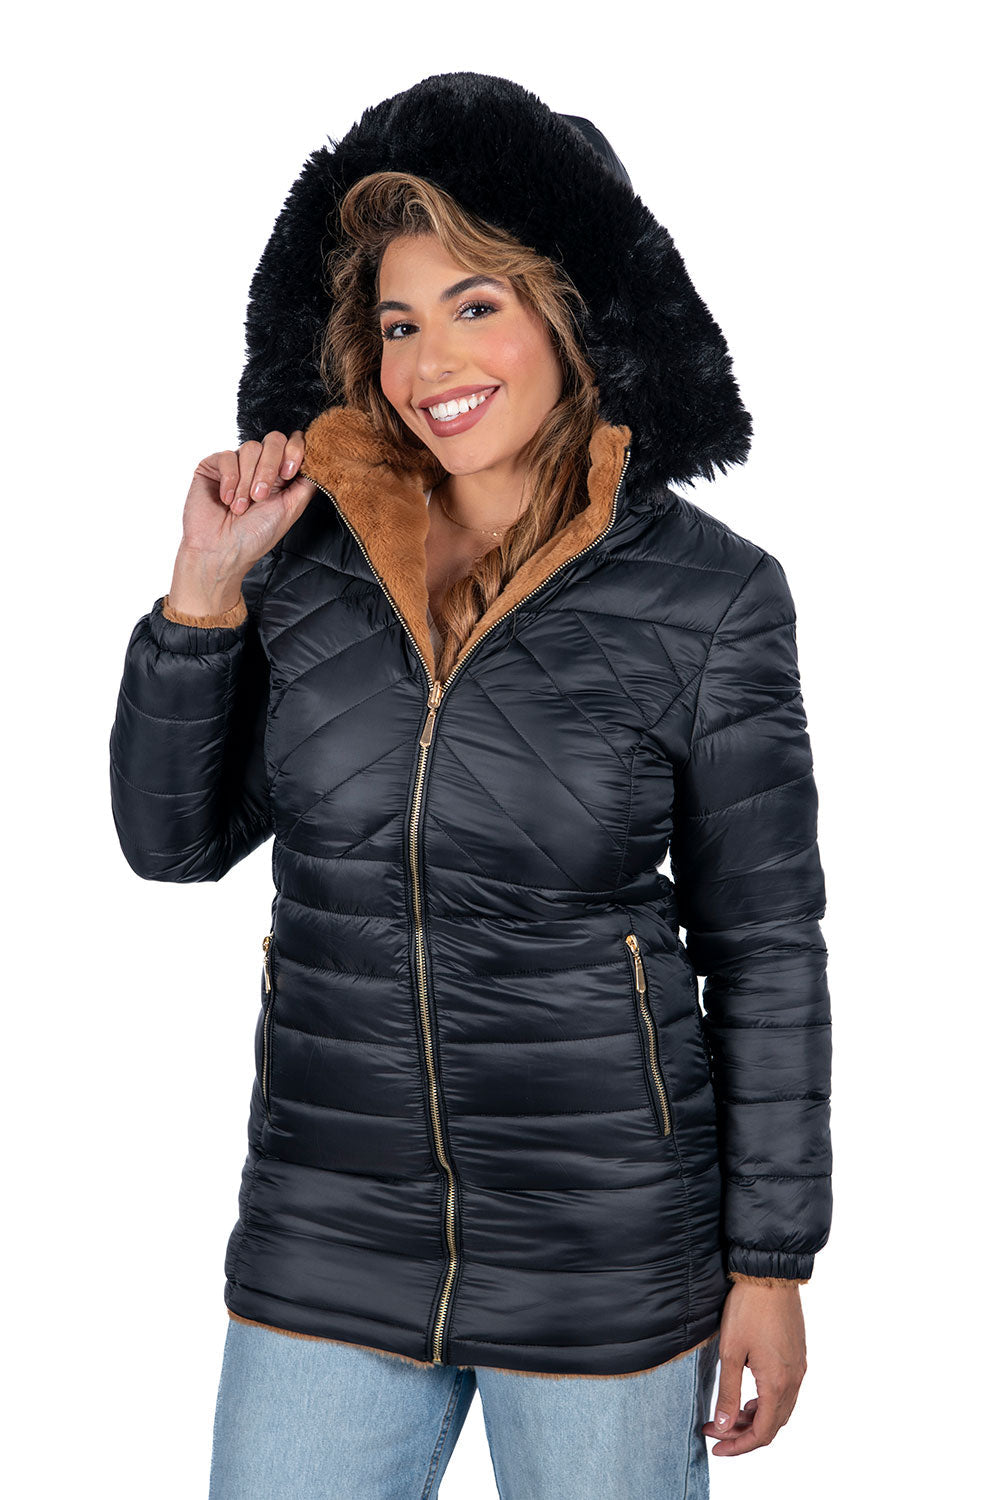 Women's Reversible Padded Fur Hoodie Jackets (S-M-L-XL / 4-8-8-4) 24 pcs